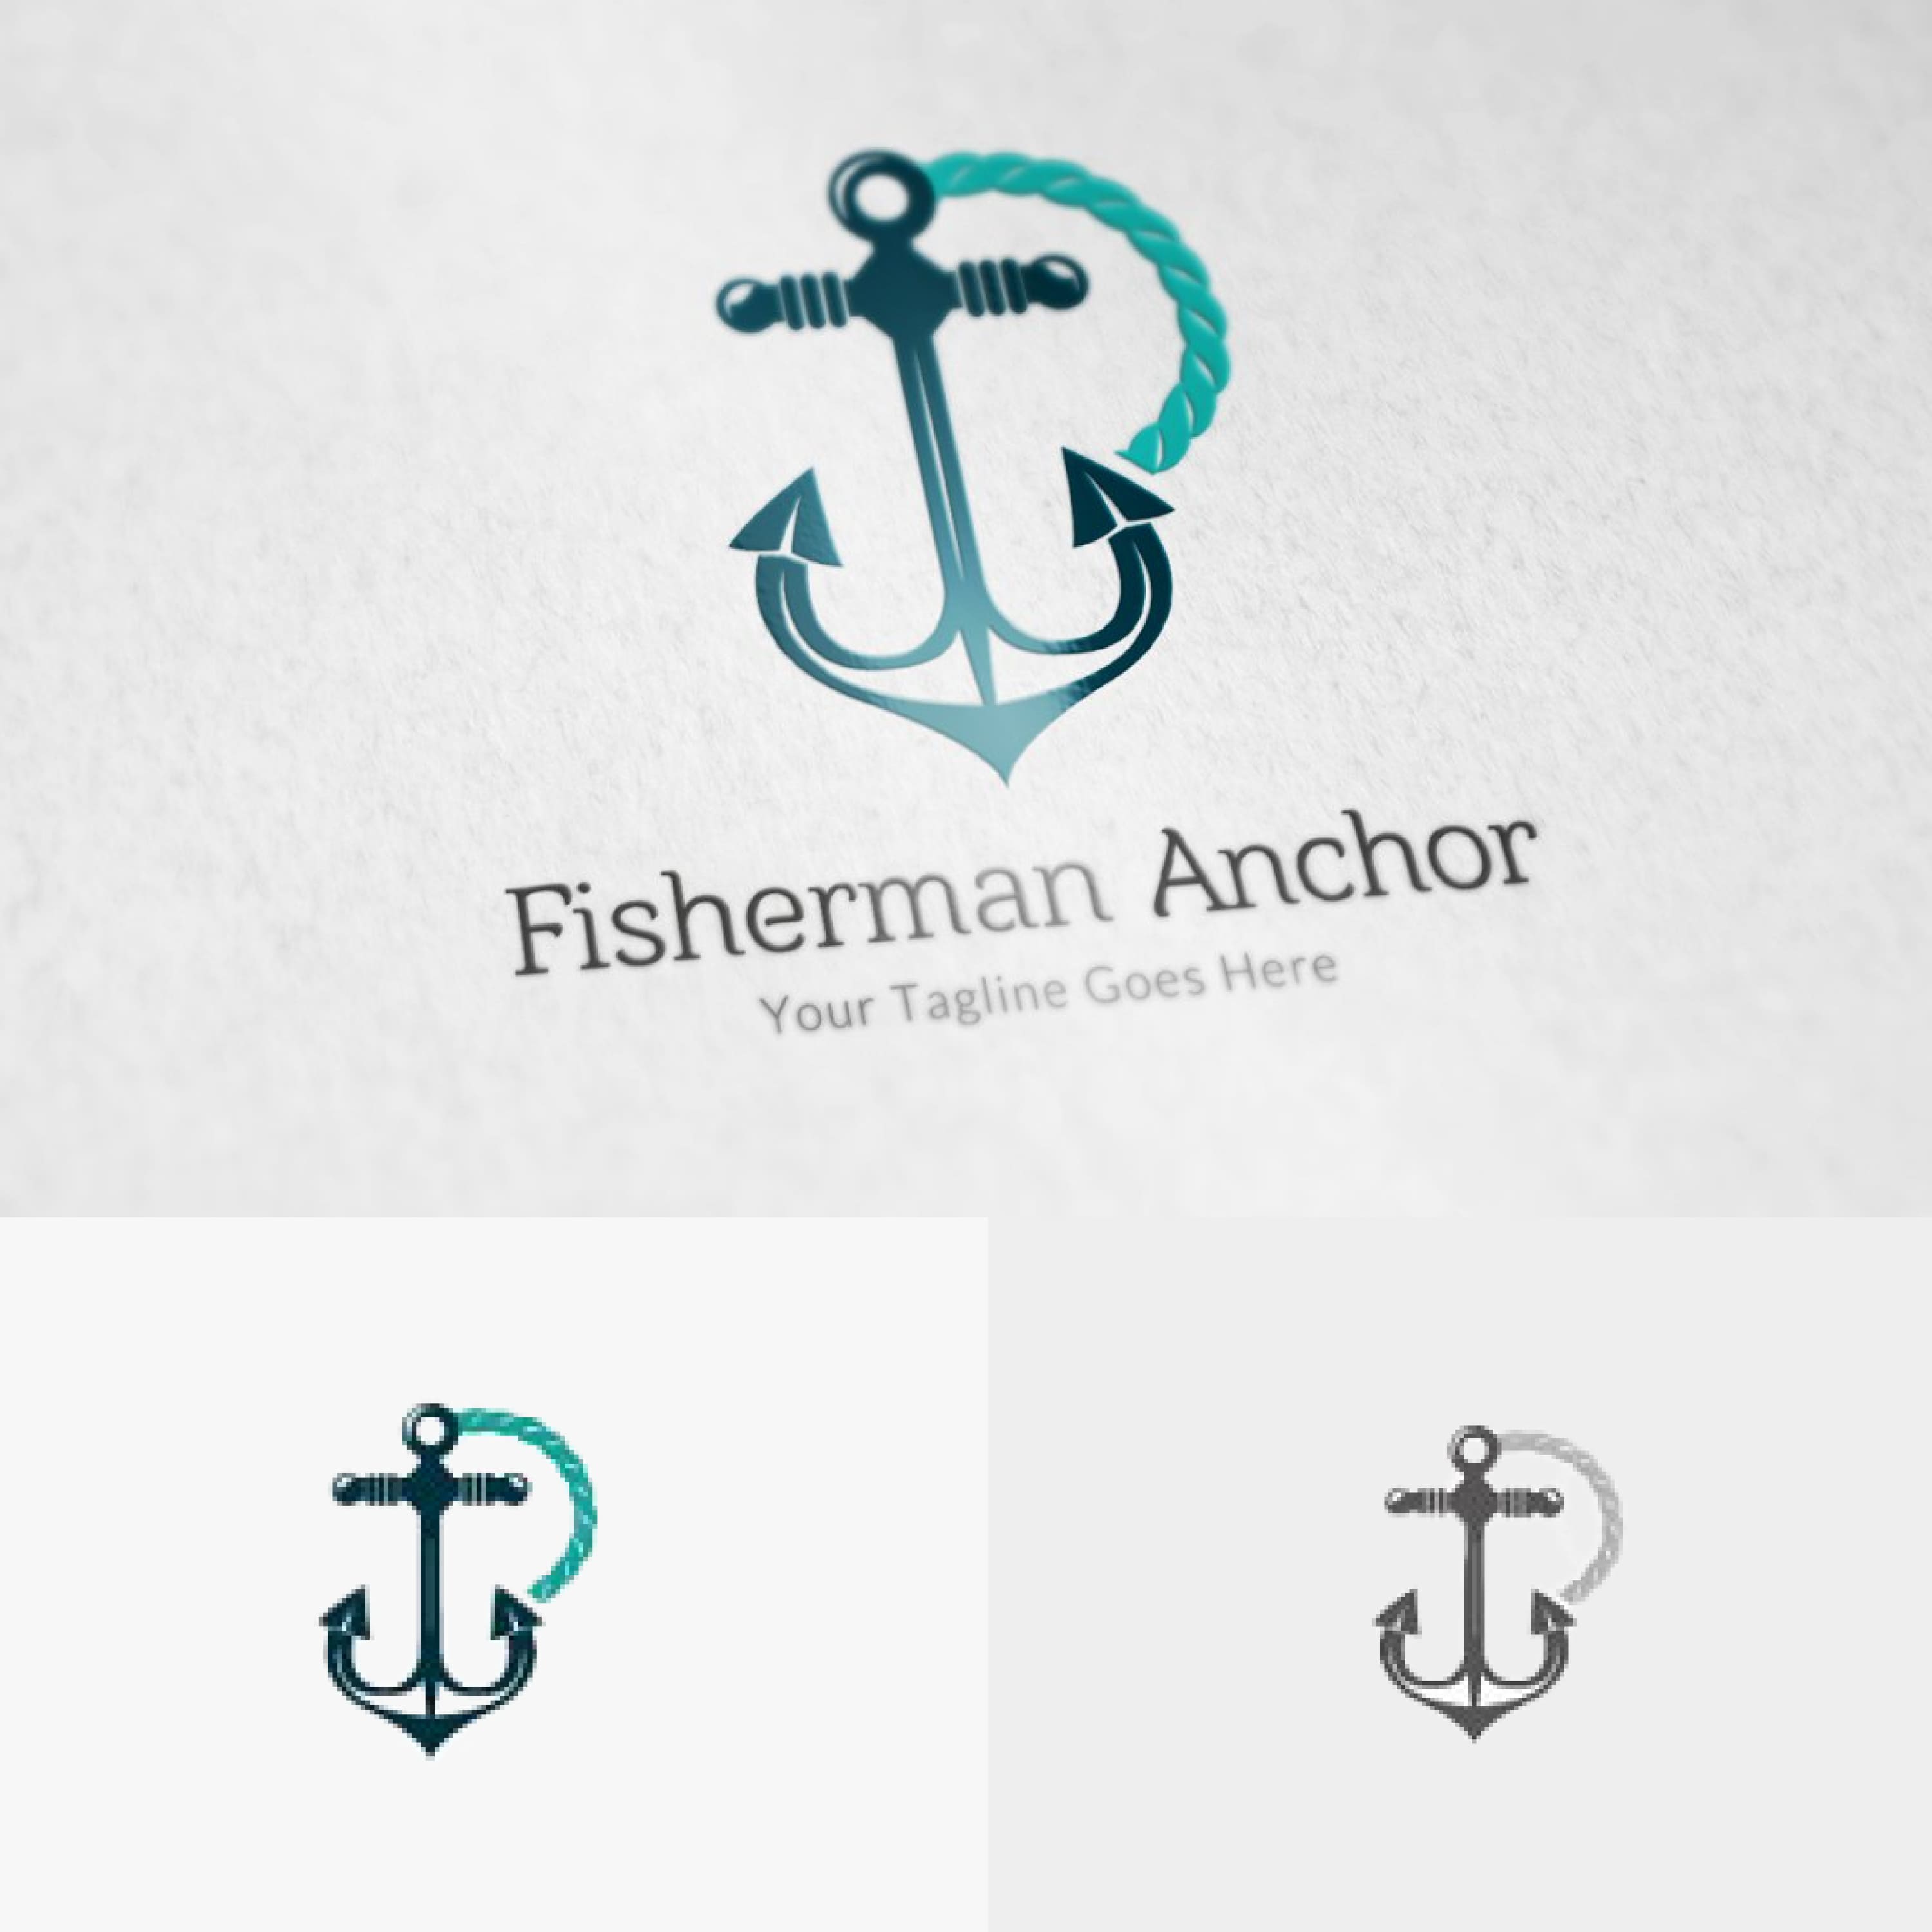 Fisherman Anchor logo cover.